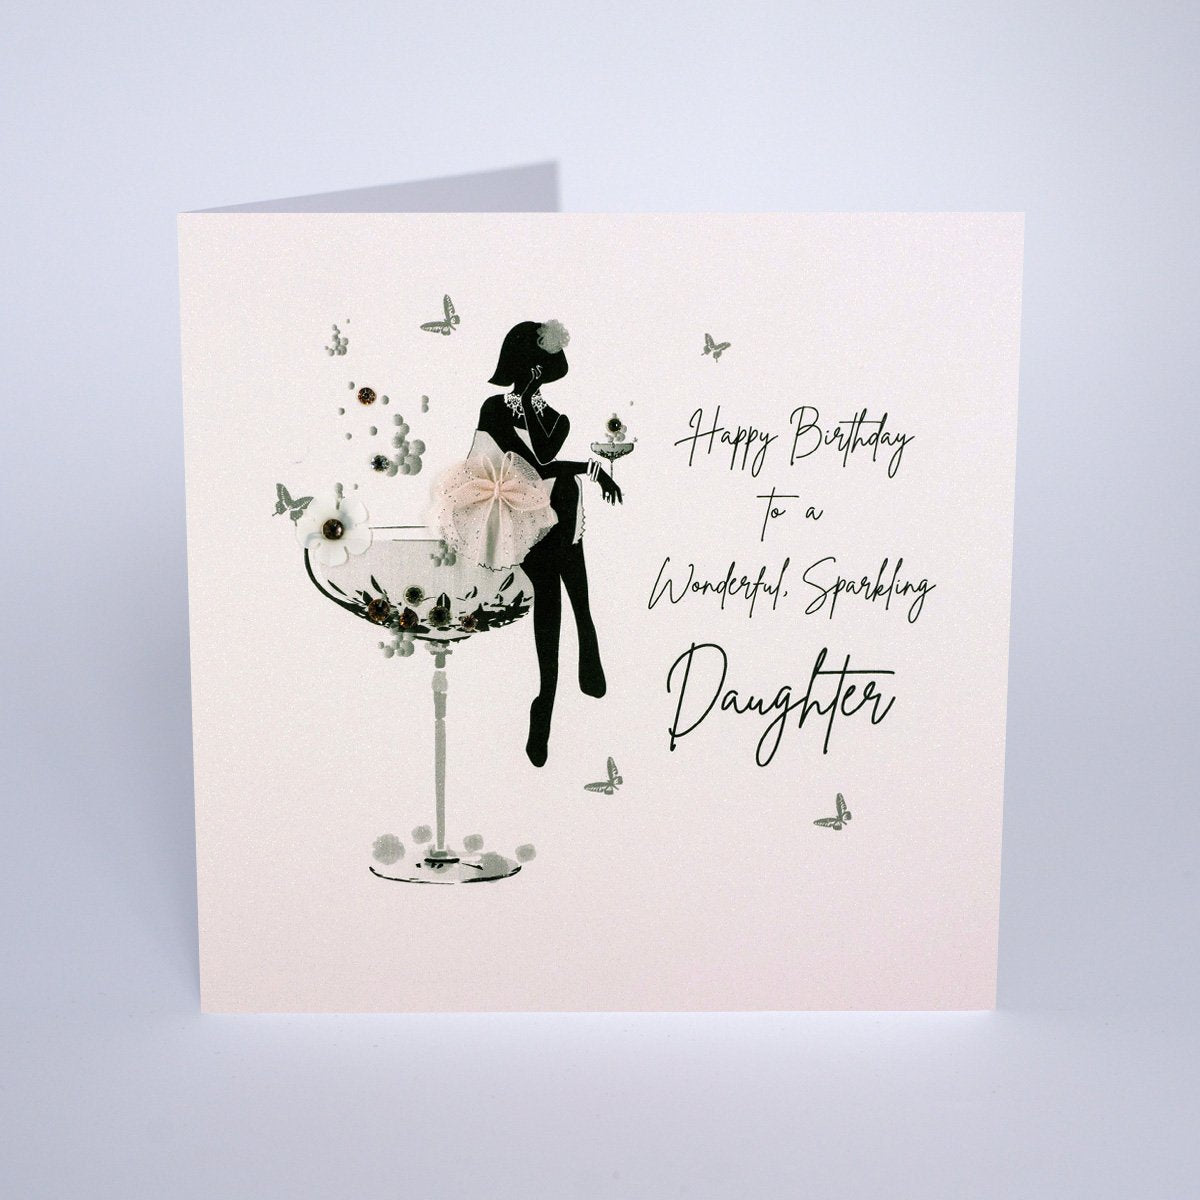 Five Dollar Shake To A Wonderful Sparkling Daughter Card